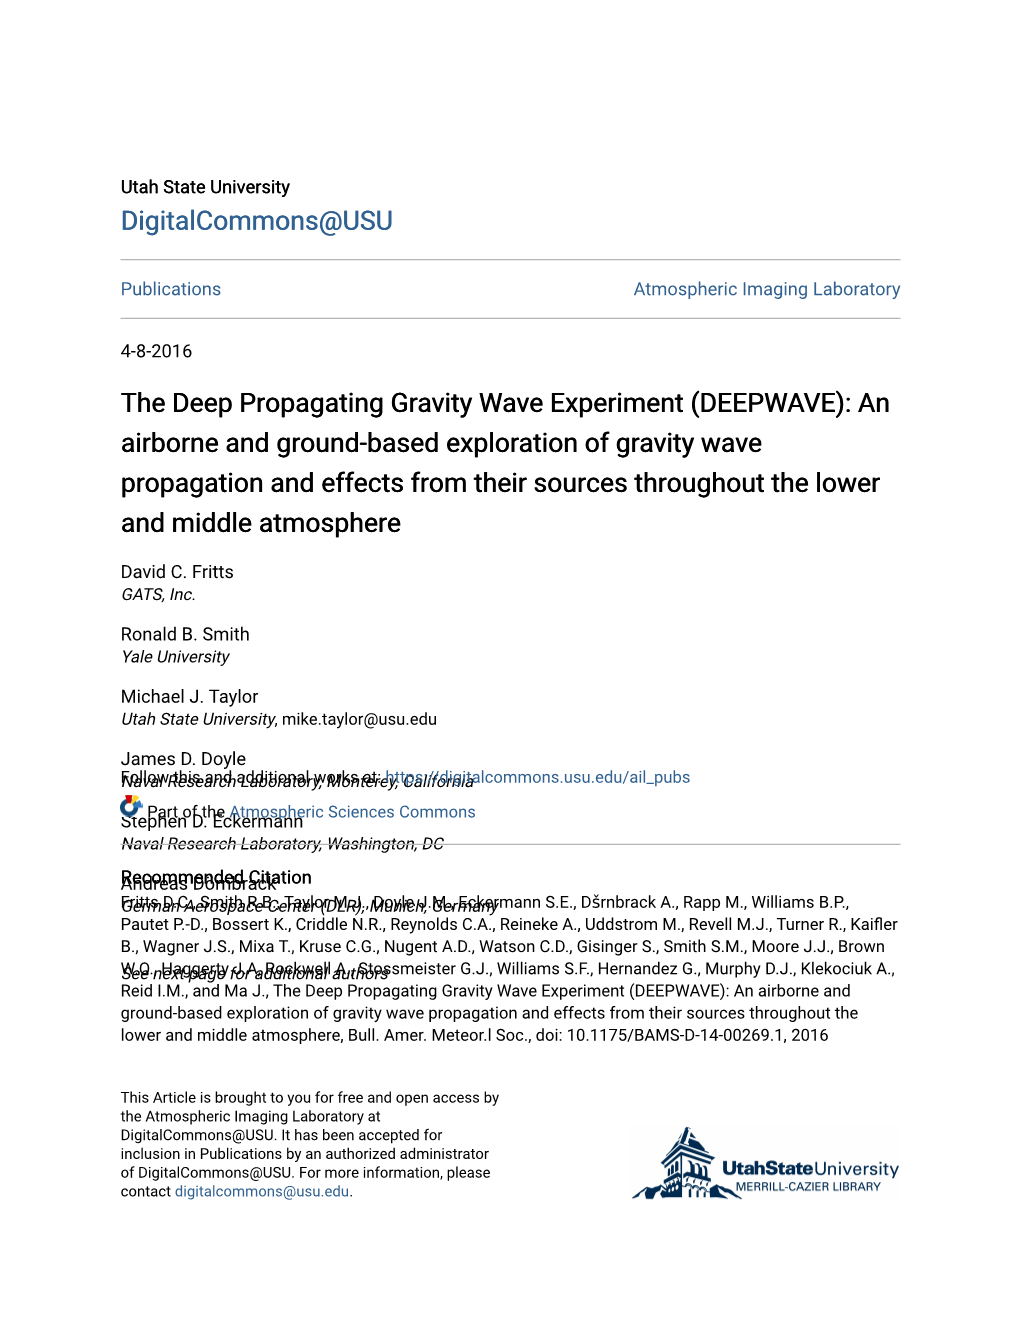 The Deep Propagating Gravity Wave Experiment (DEEPWAVE)